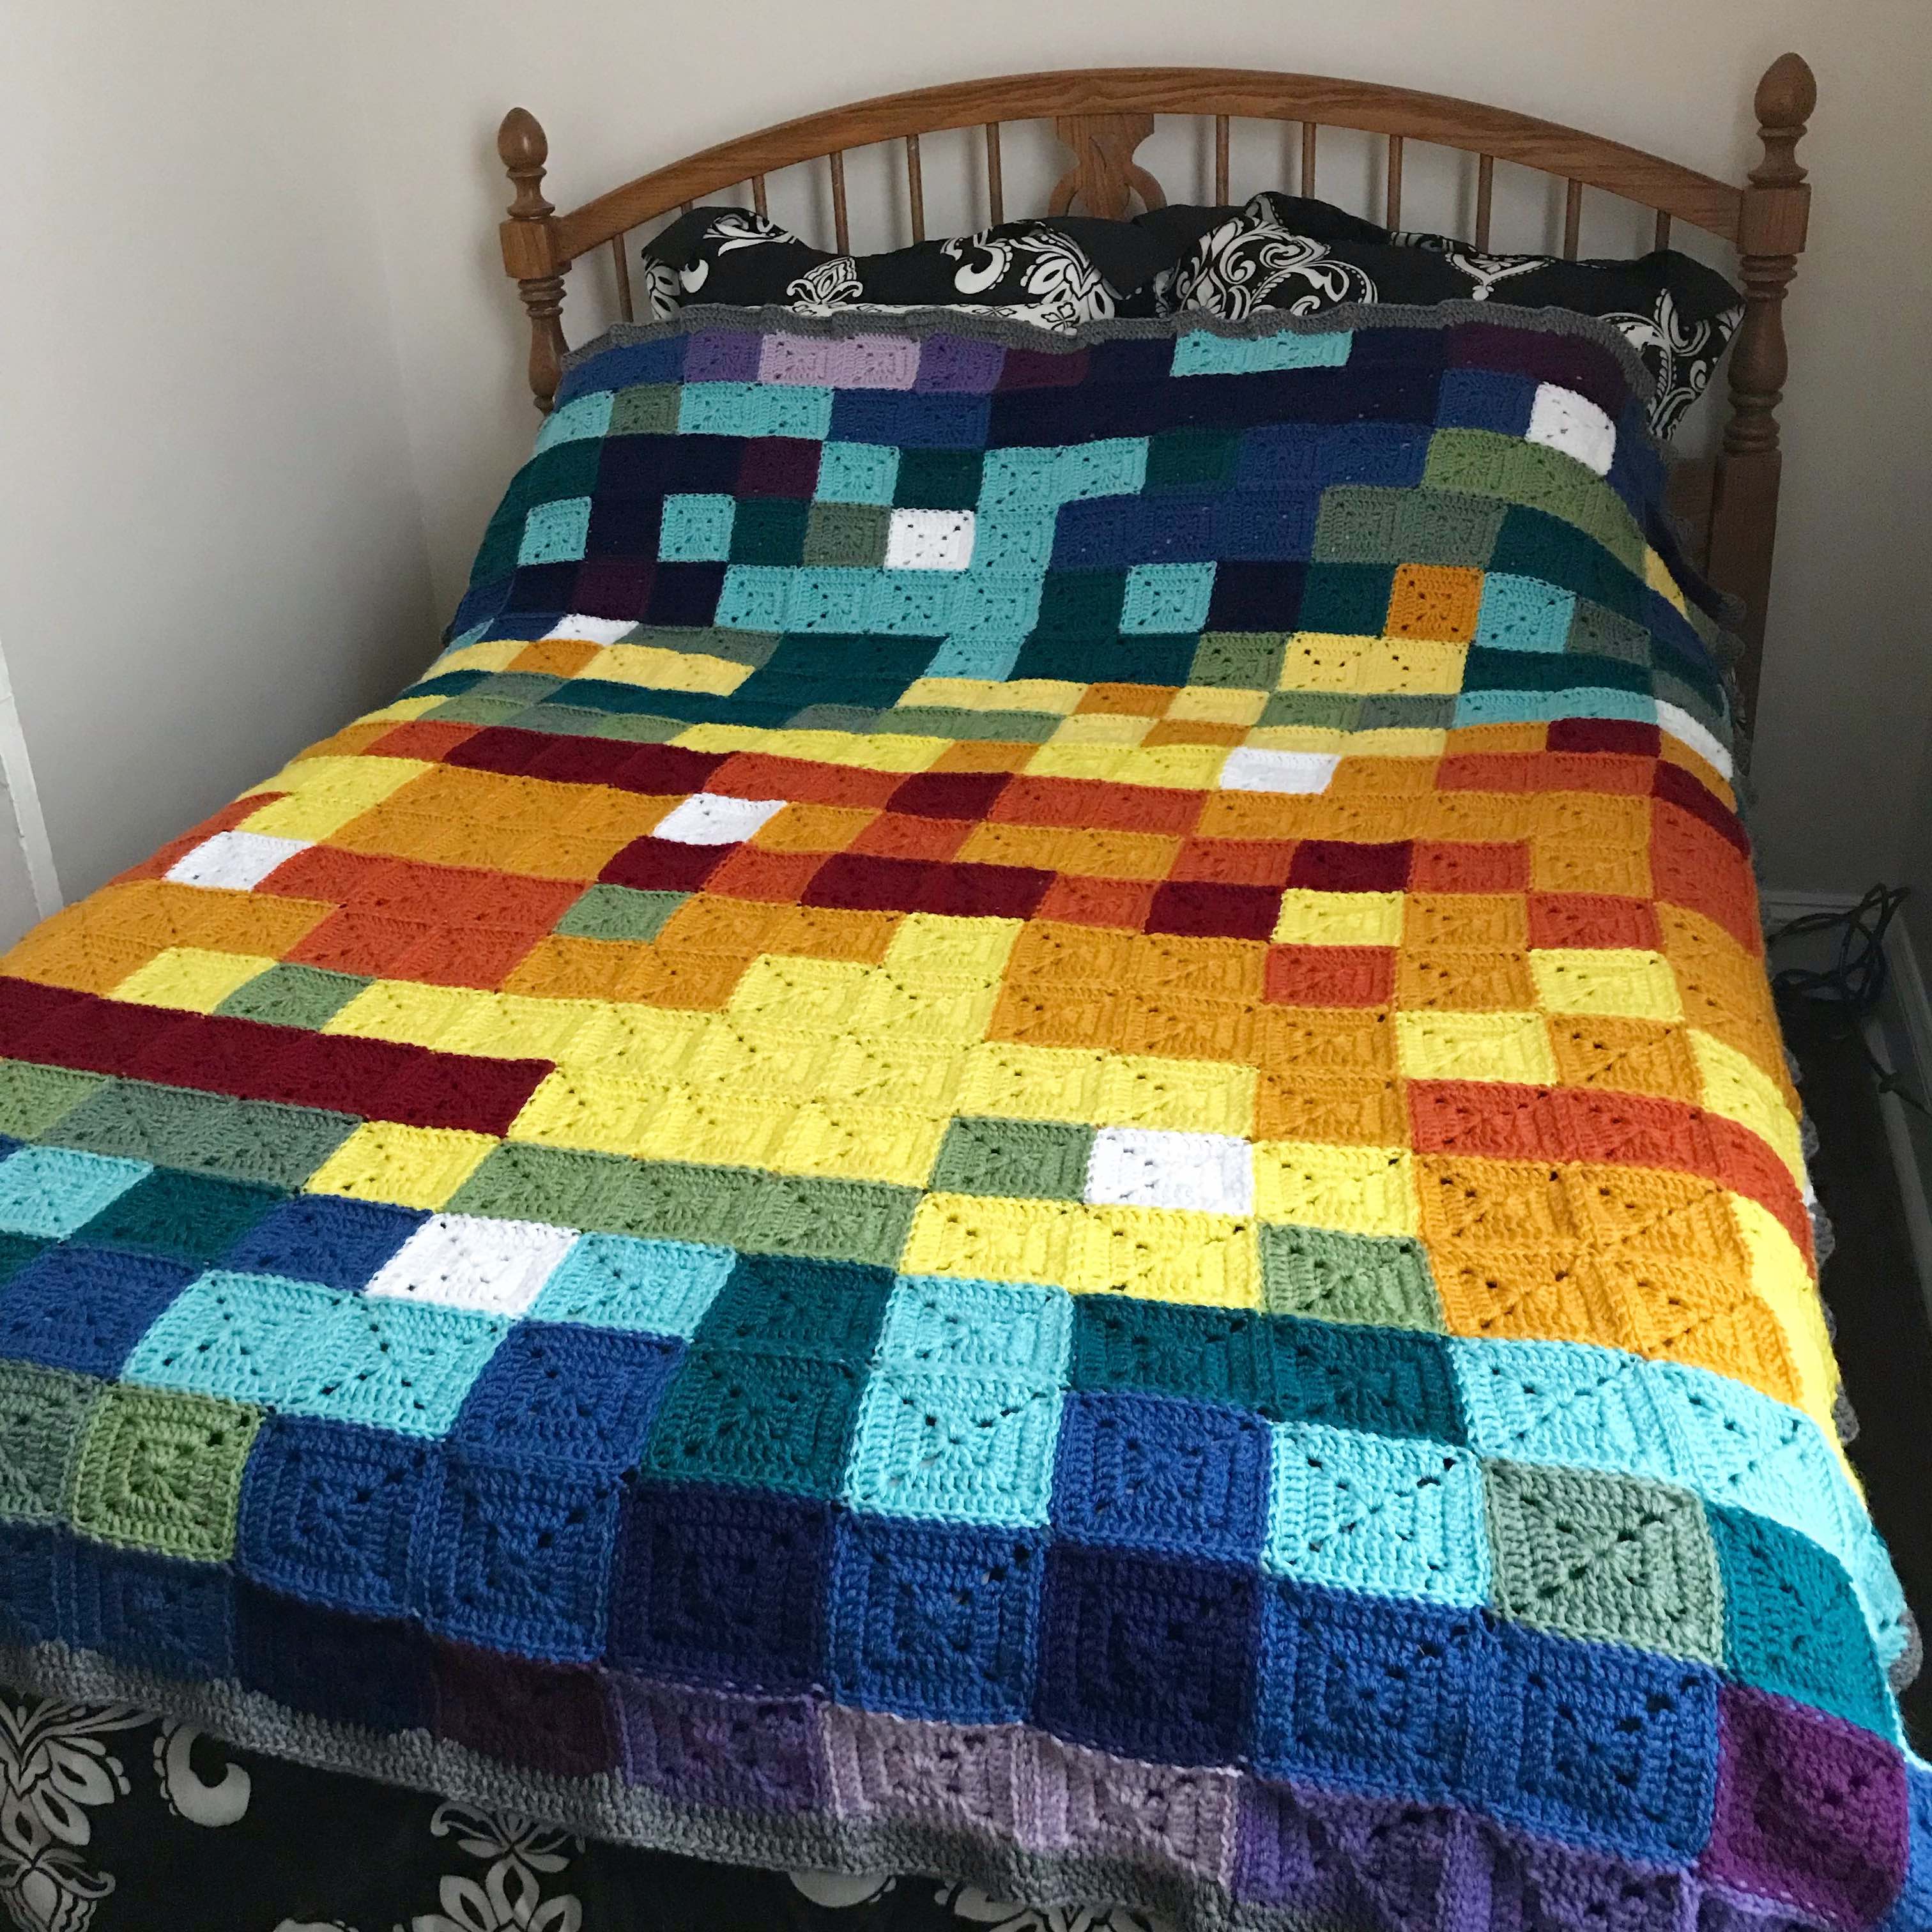 My 2017 granny square temperature blanket